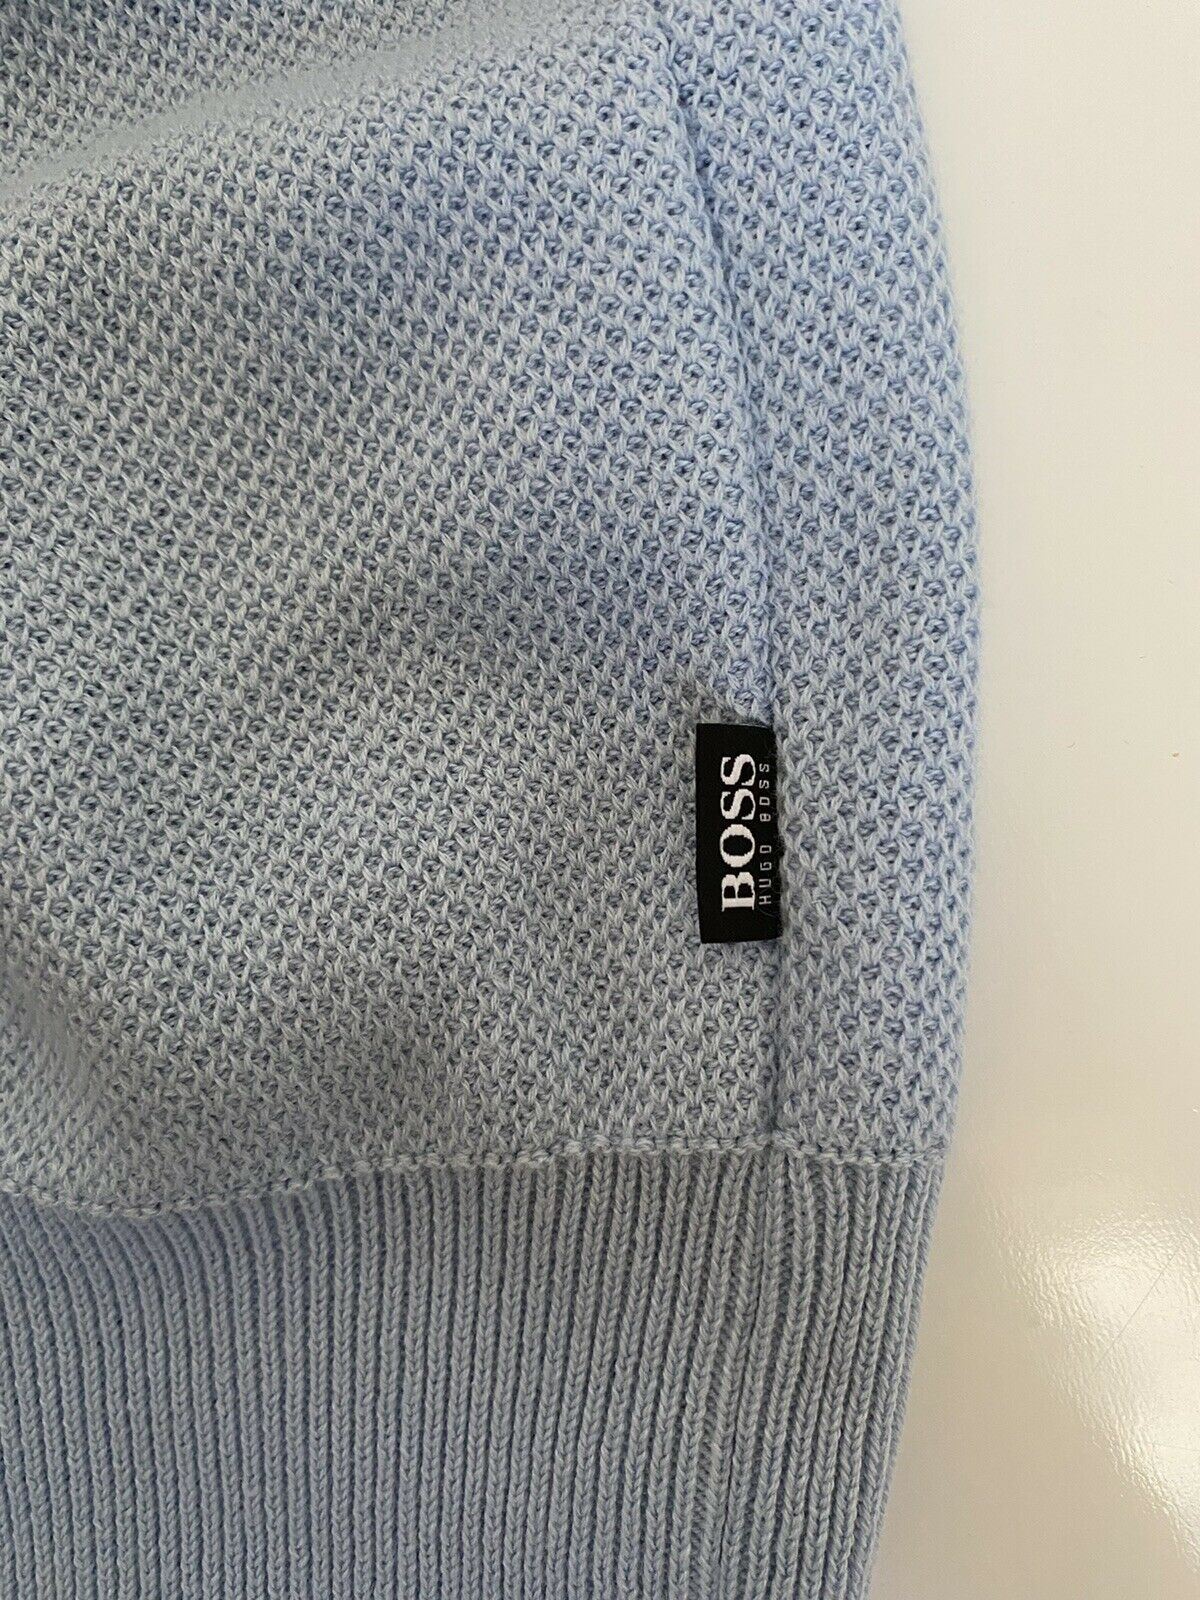 NWT $178 BOSS Hugo Boss Men's Crewneck Light Blue Sweater Medium